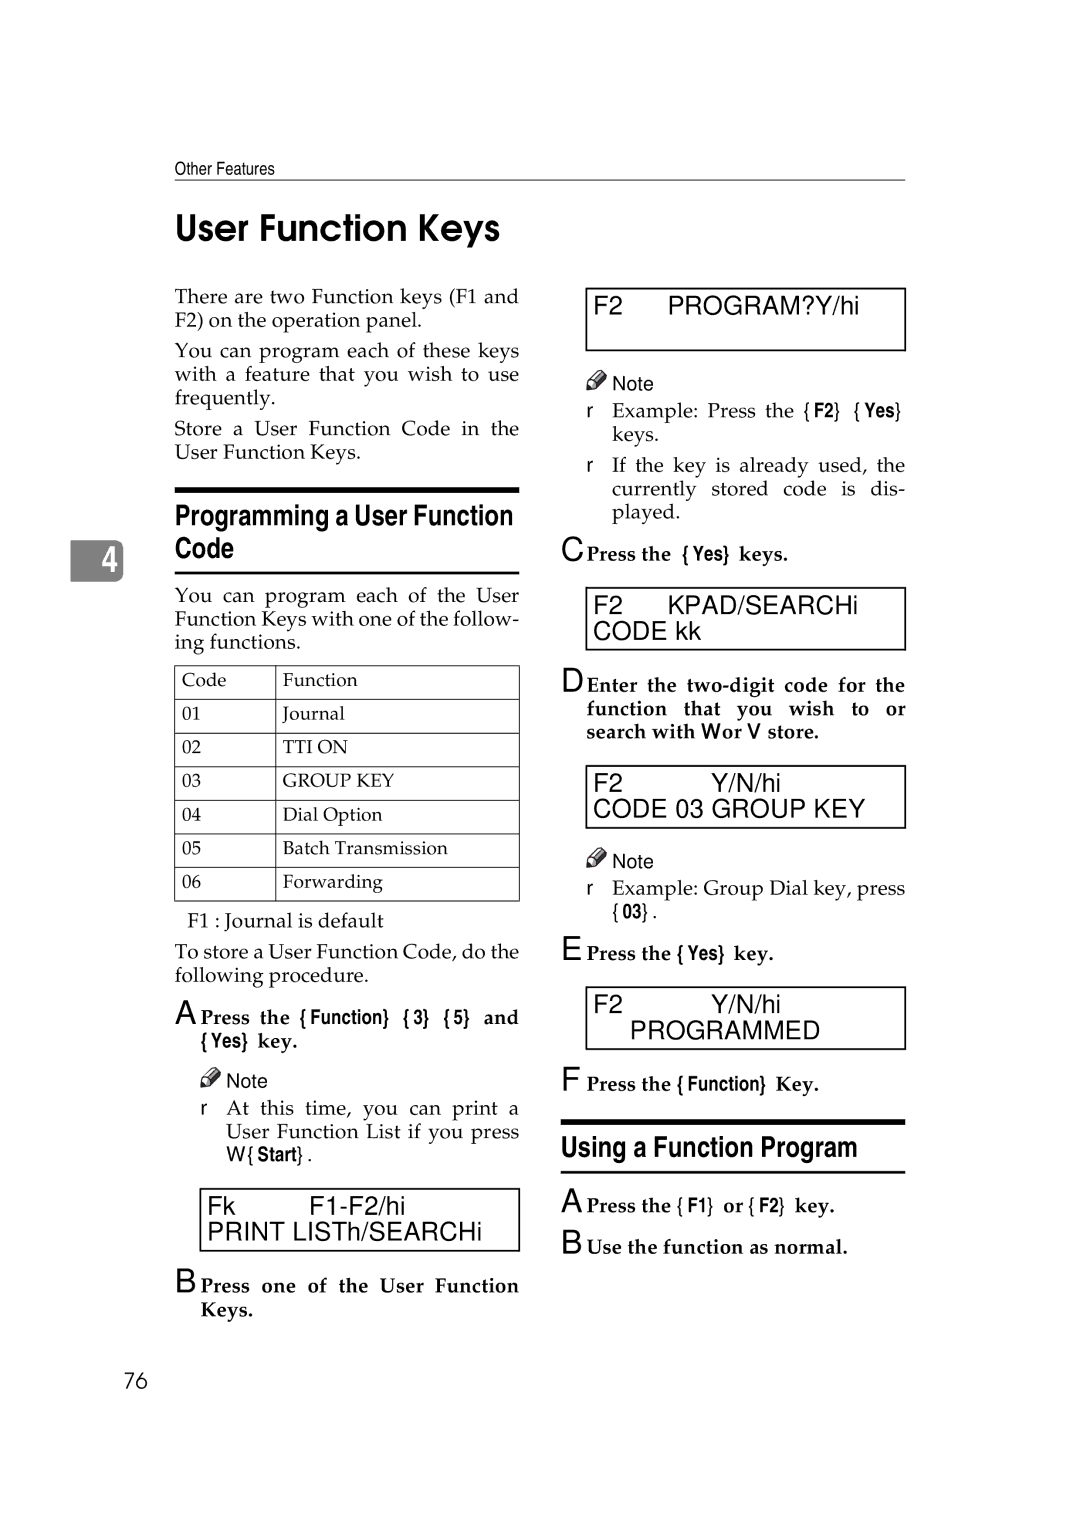 Ricoh H545 manual User Function Keys, Using a Function Program, Code 03 Group KEY, Programmed 